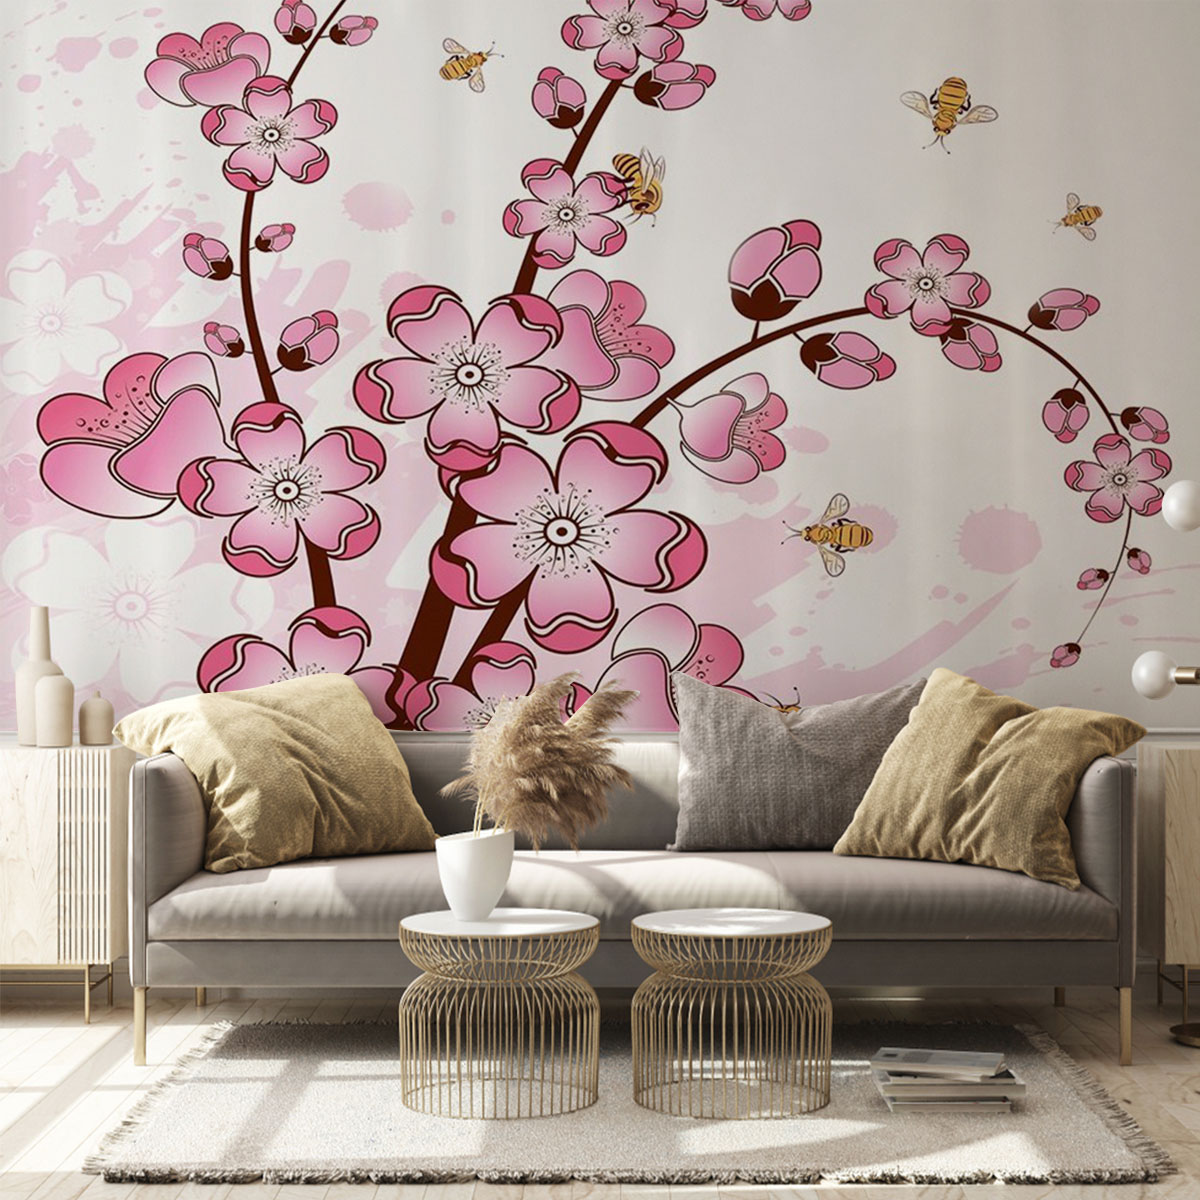 Pretty Cherry Blossom Wall Mural